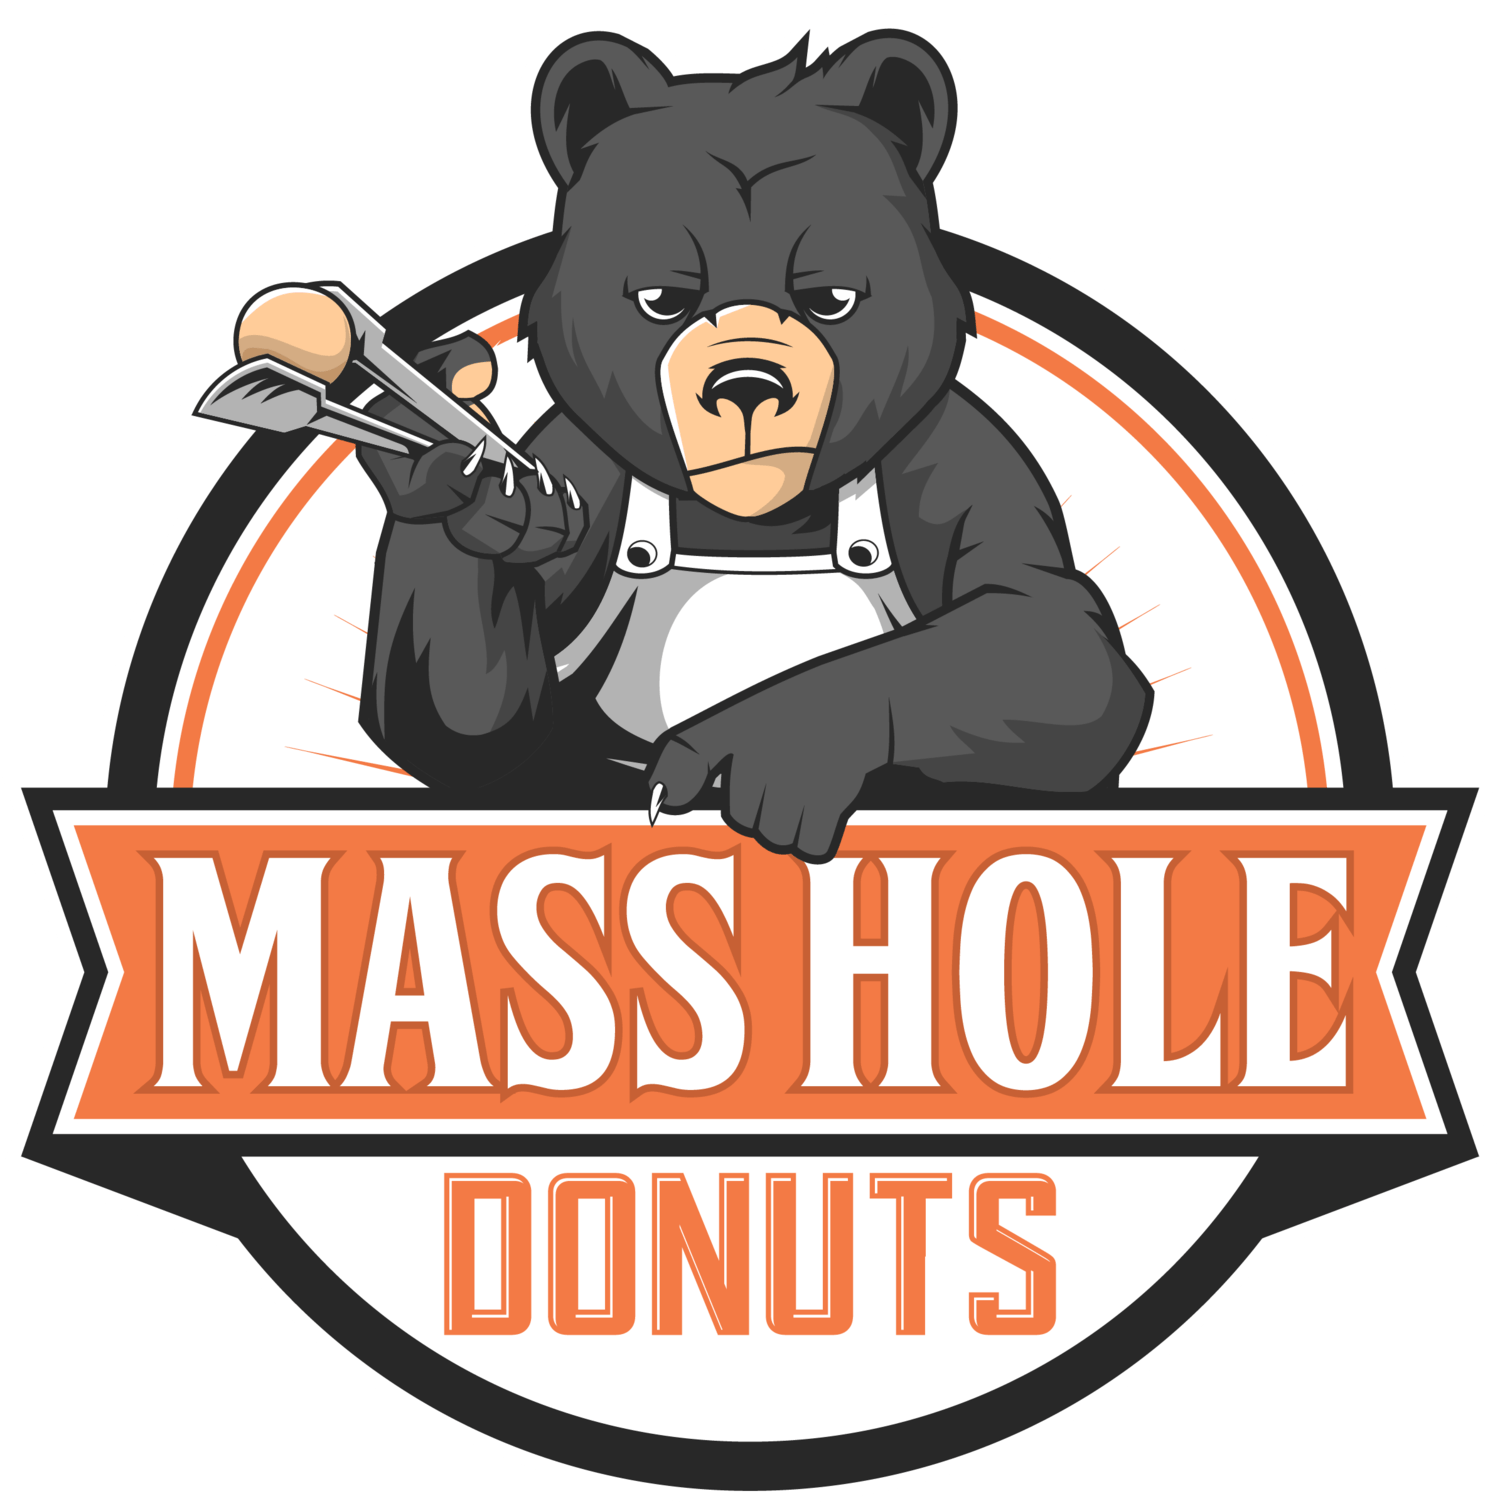 Masshole Logo - Mass Hole Donuts